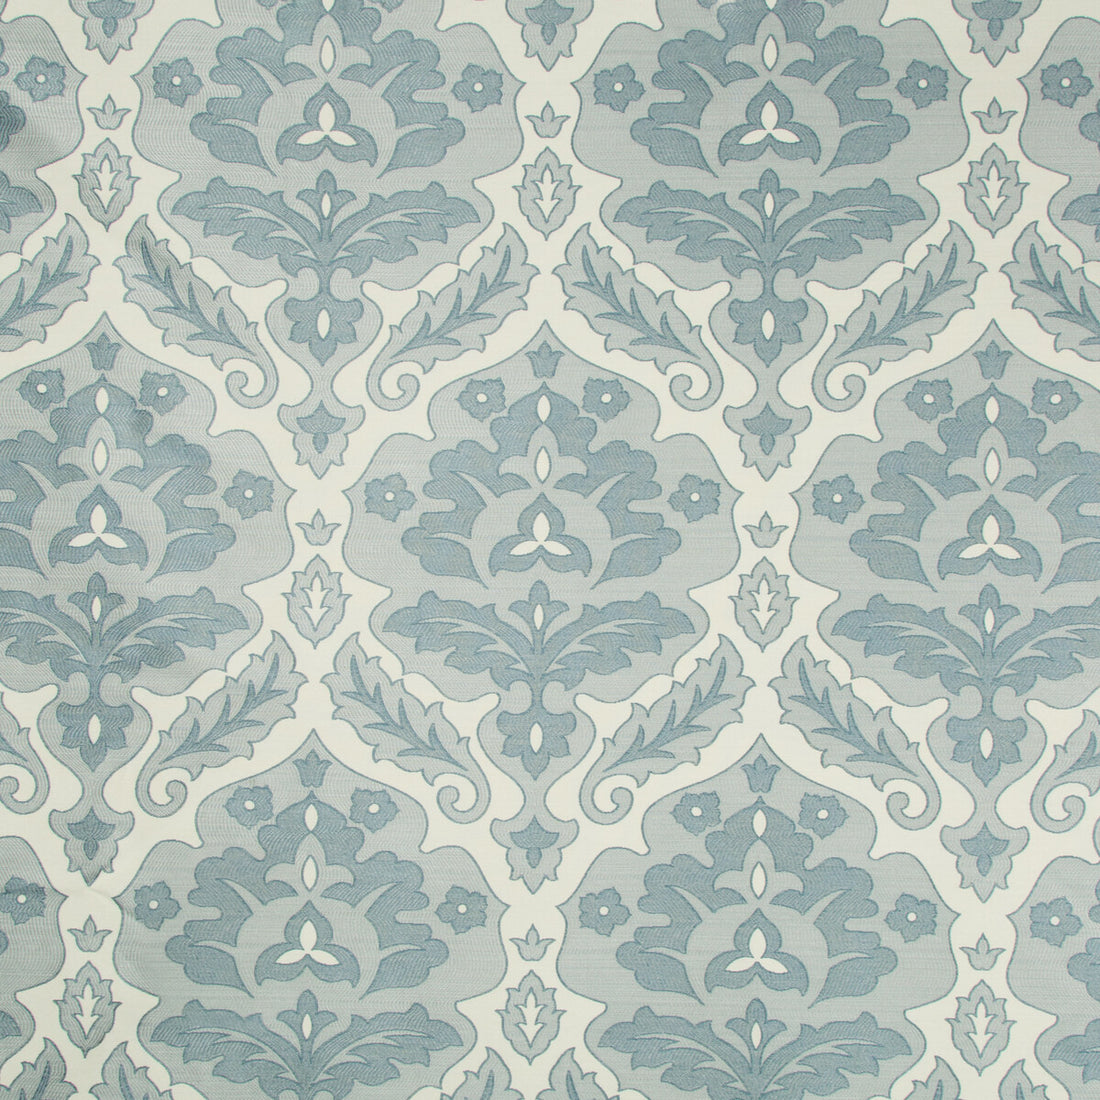 Kravet Design fabric in 34719-5 color - pattern 34719.5.0 - by Kravet Design in the Gis collection